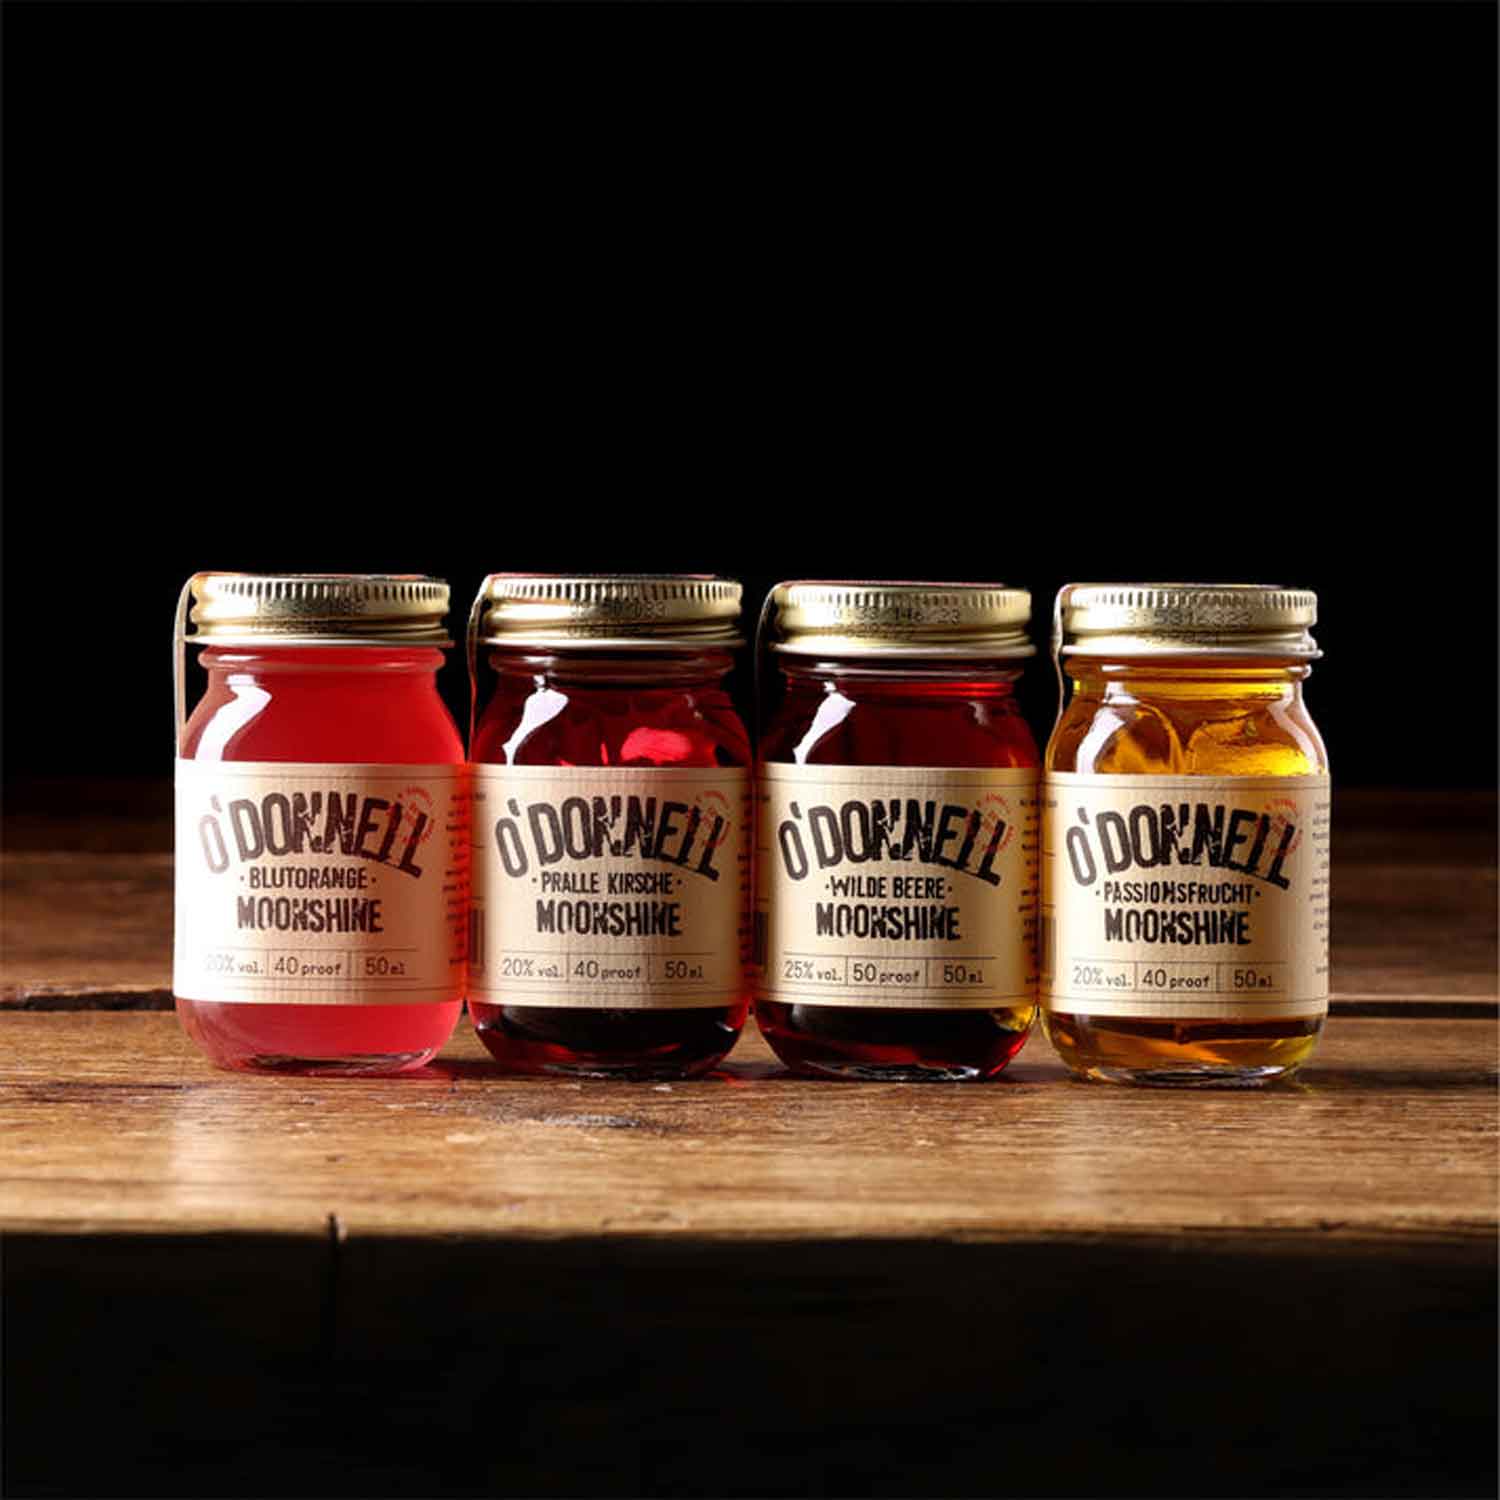 Liqueur Set Summer Minis Moonshine Jars (4x50ml)